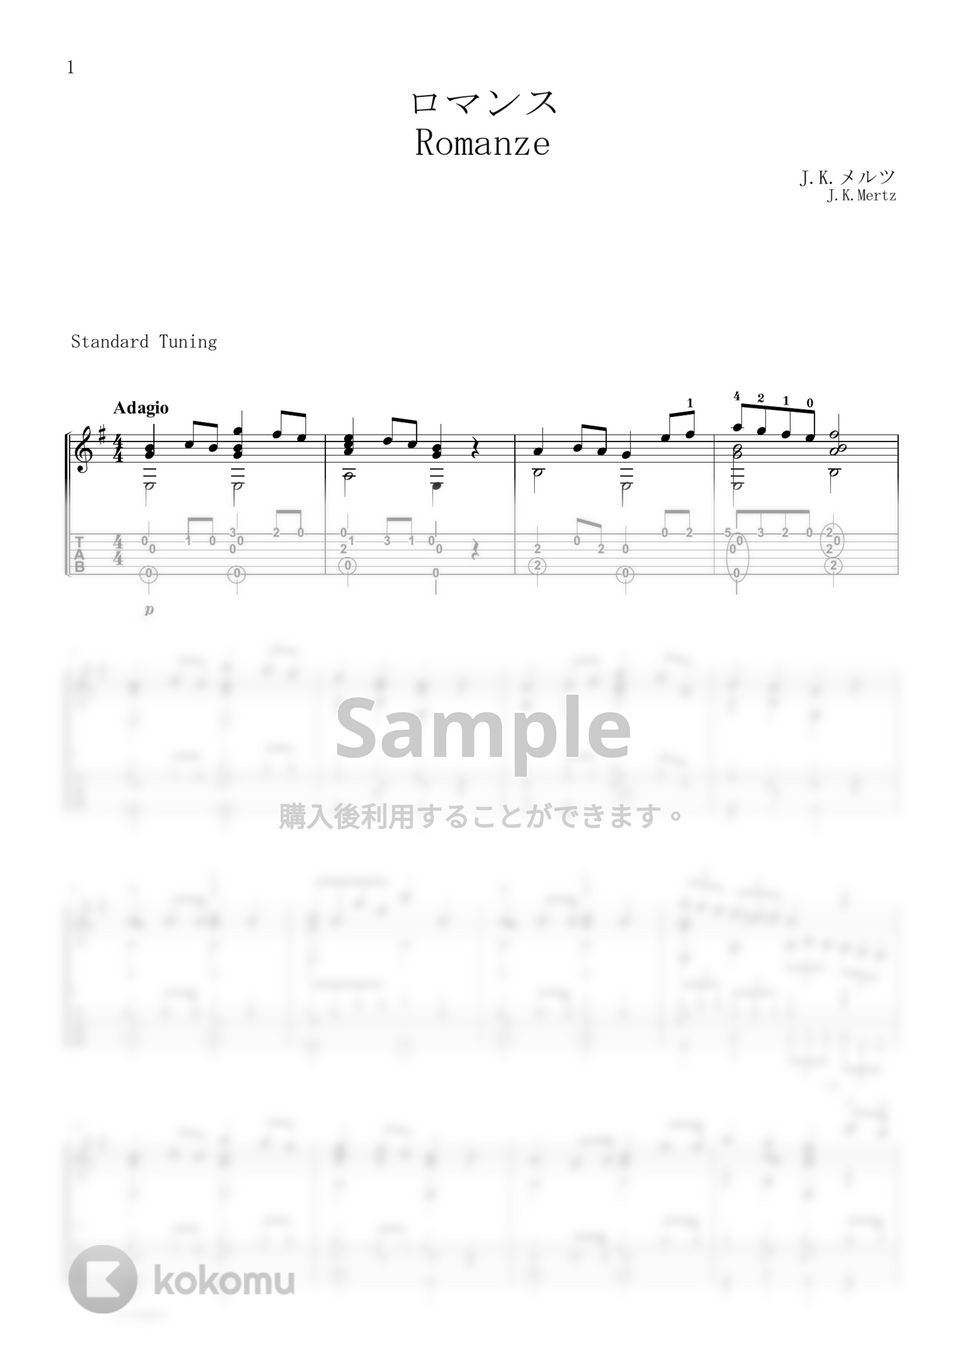 J.K.メルツ - ロマンス (TAB譜付き) by 川口コウスケ